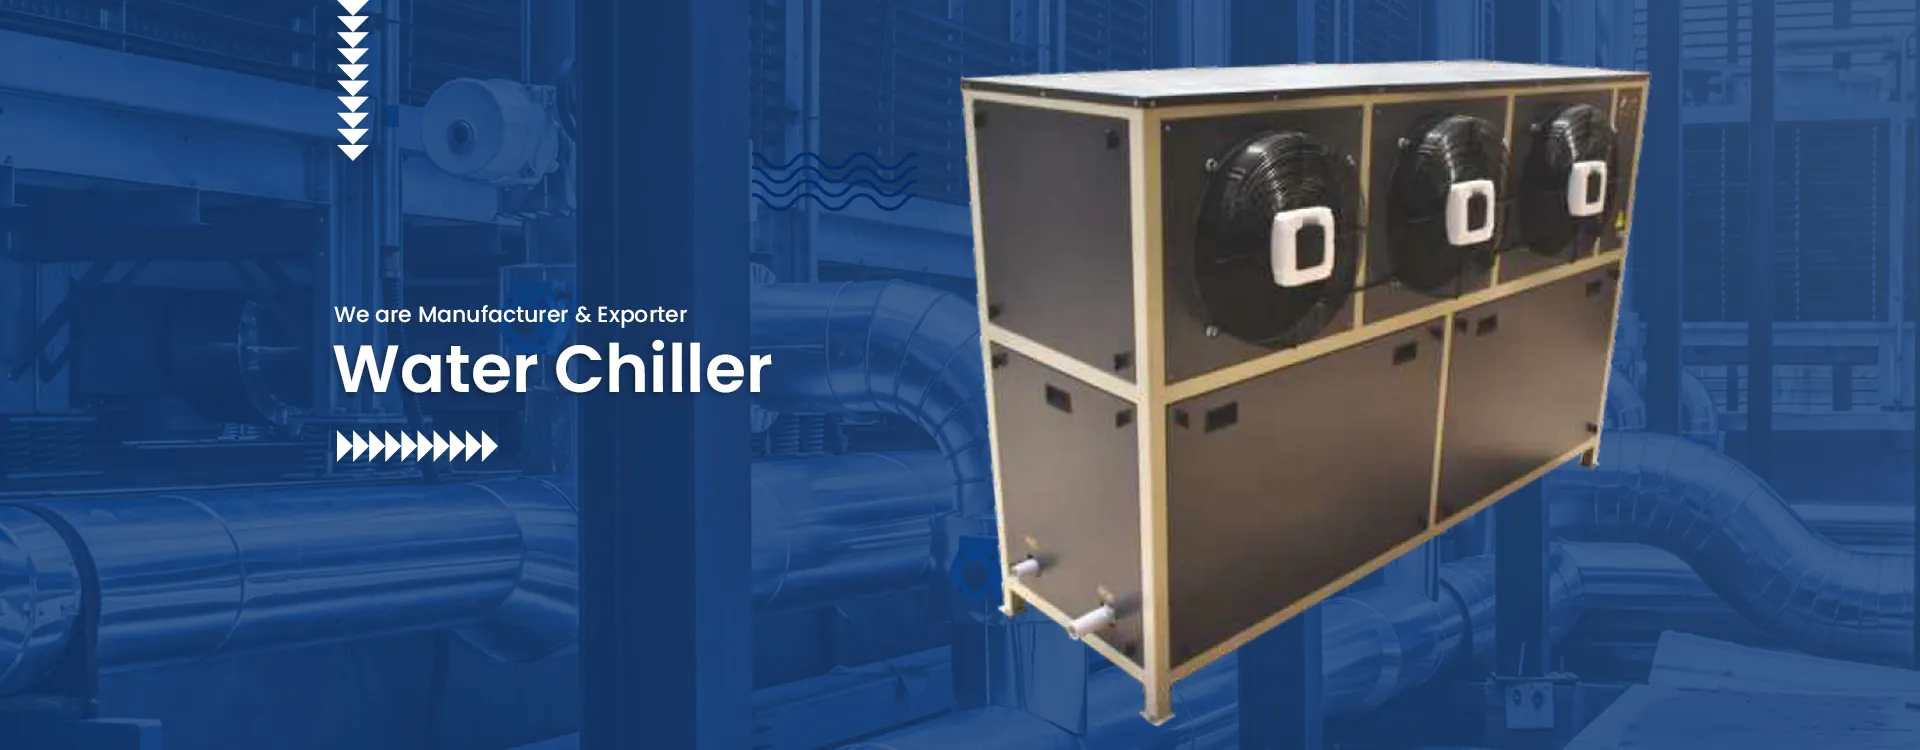 Panel Air Conditioner Split Type Manufacturer In Maharashtra